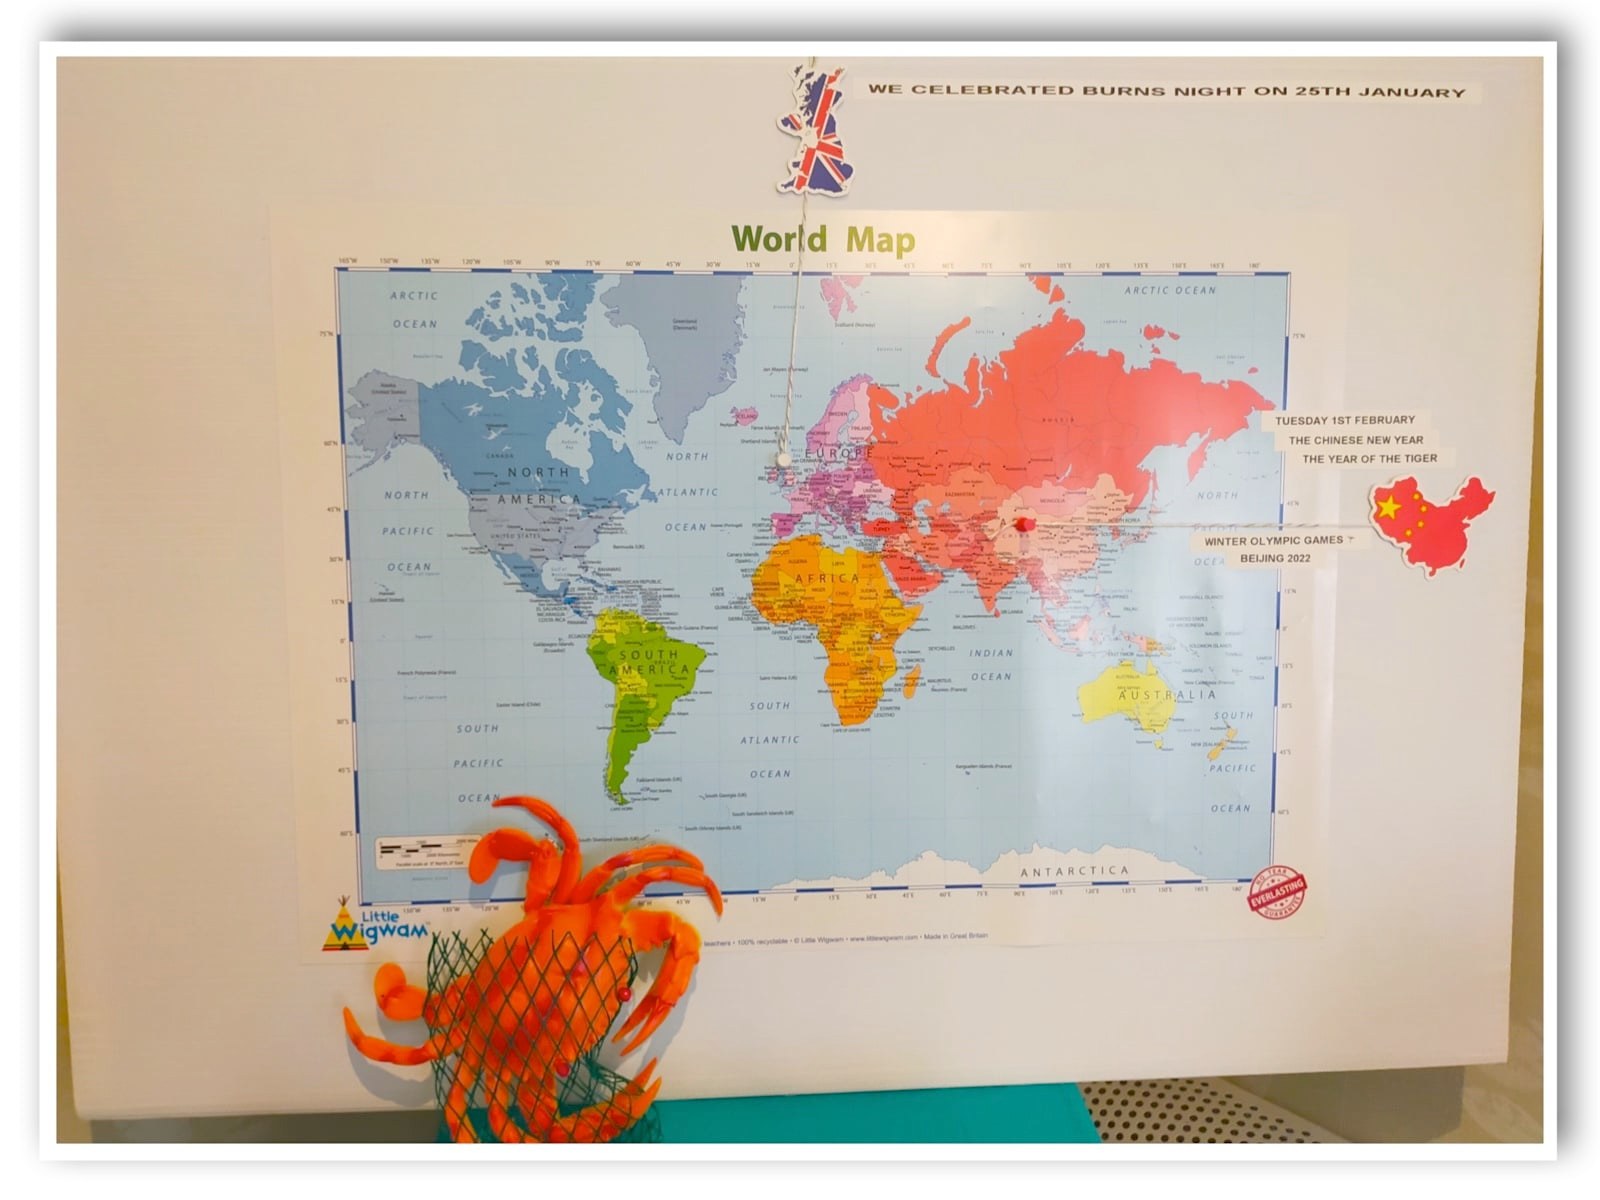 World map at The Ashton